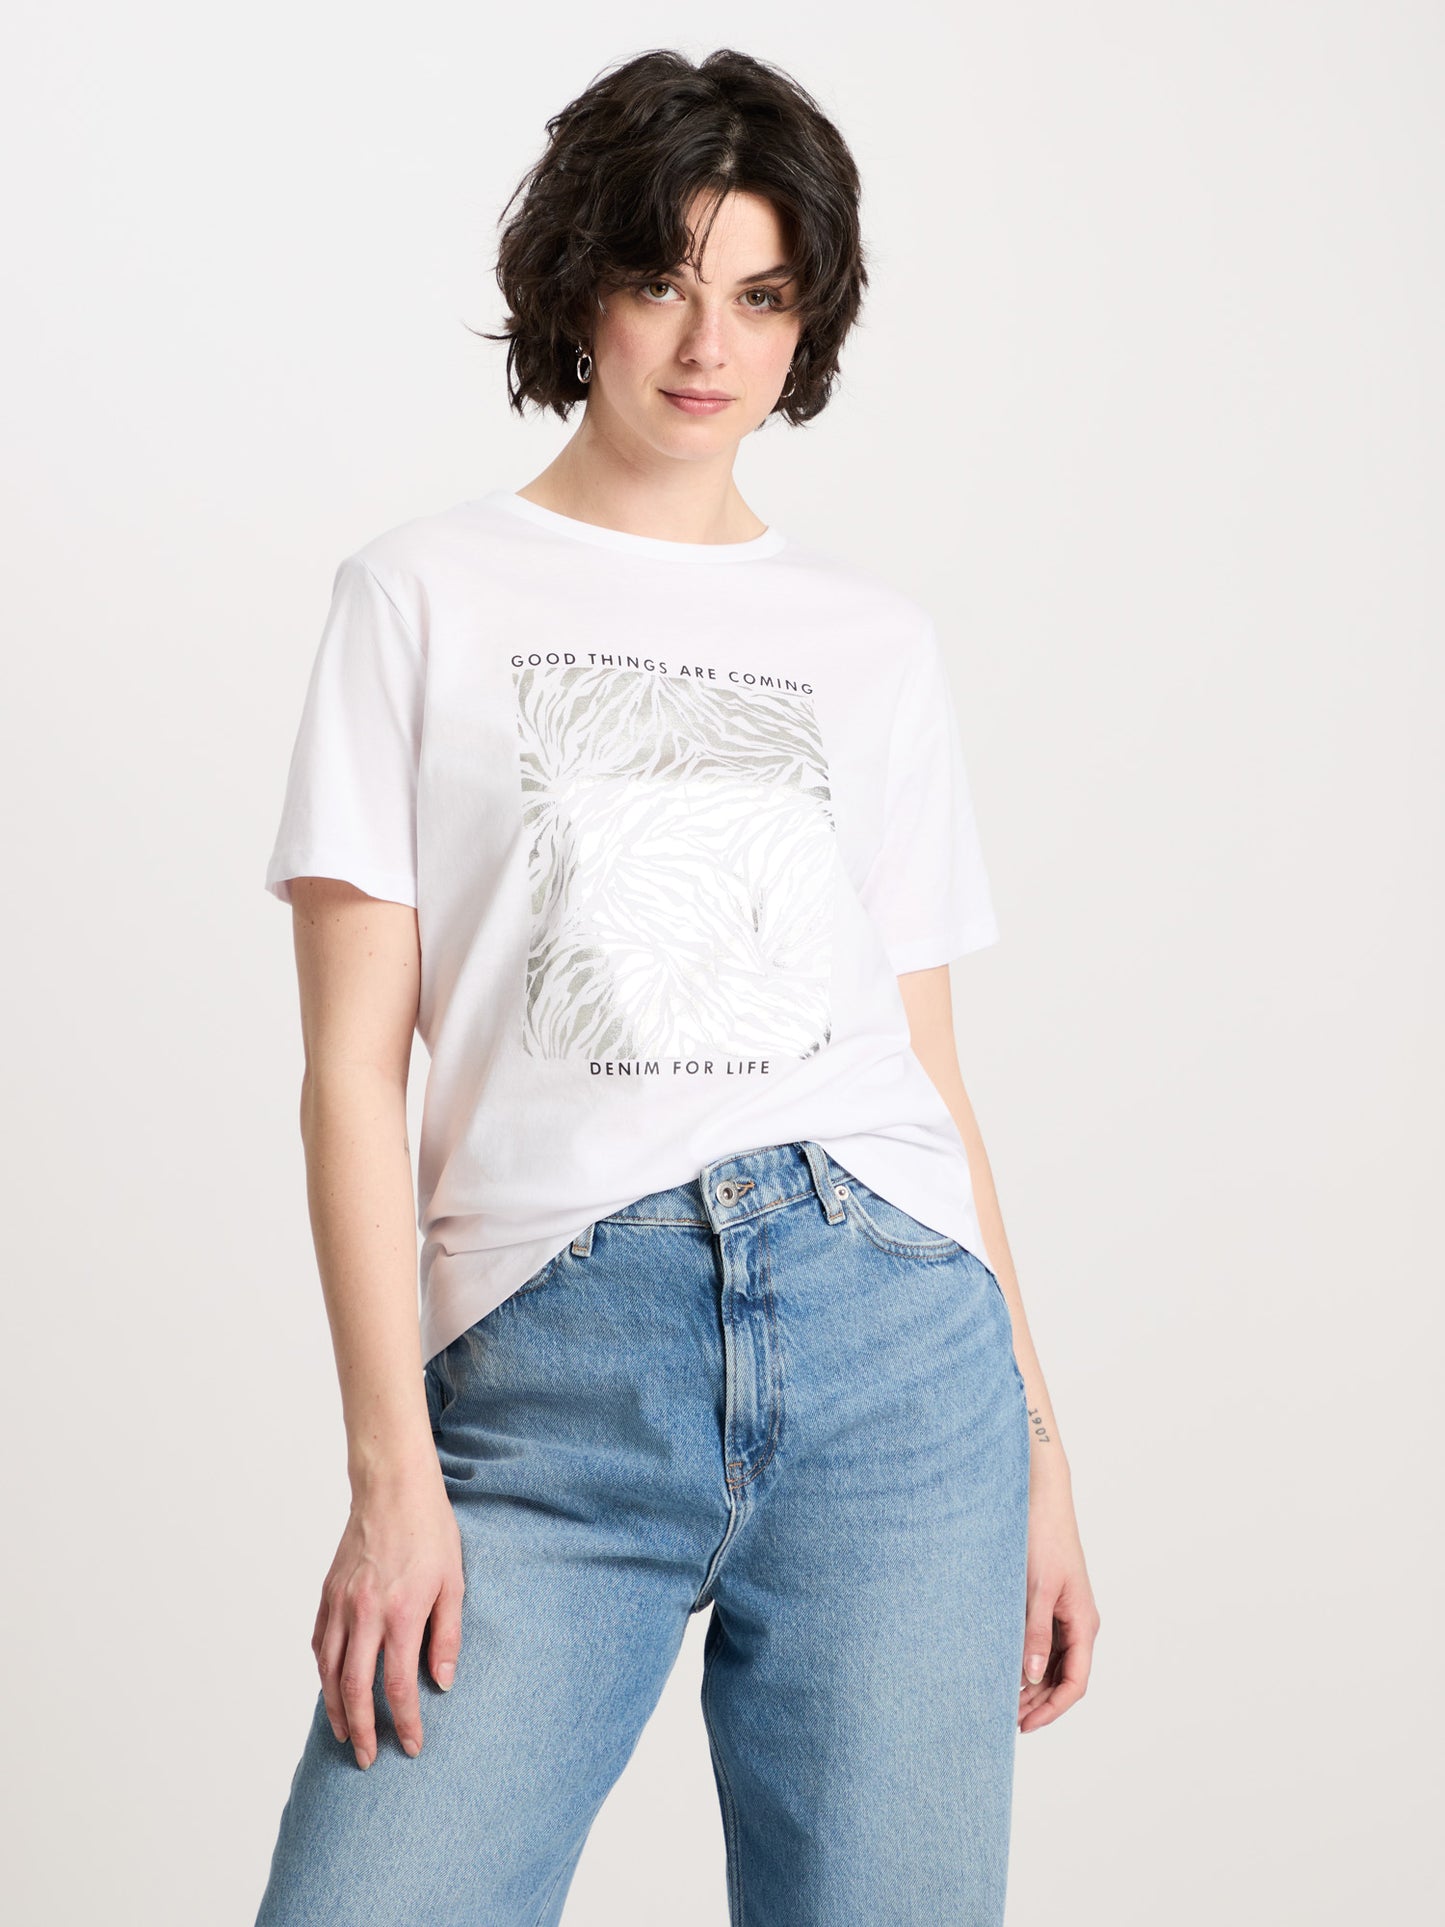 Women's regular T-shirt with print and metallic effects, white.